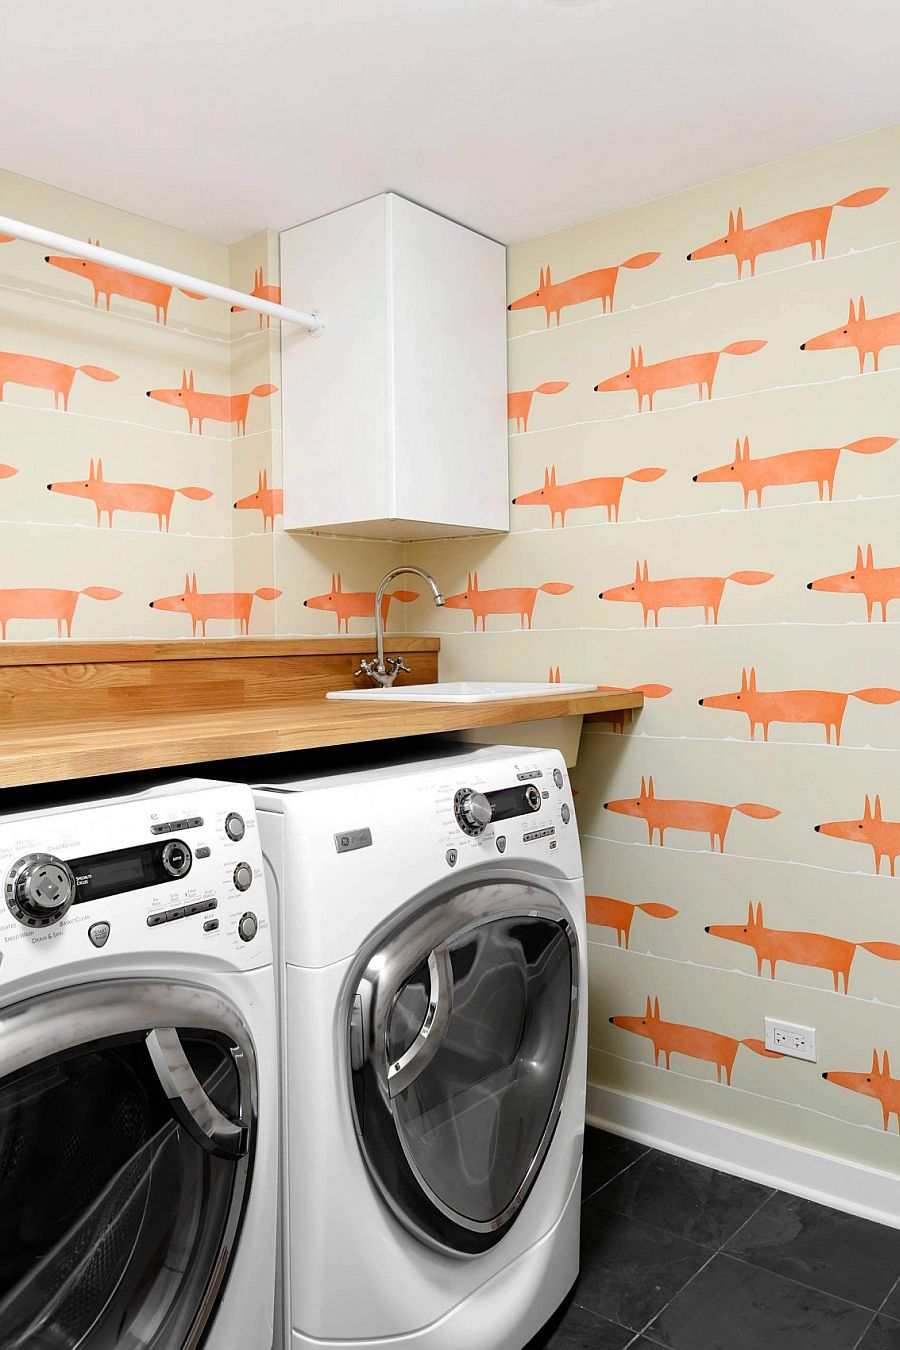 Mr. Fox wallpaper in the laundry